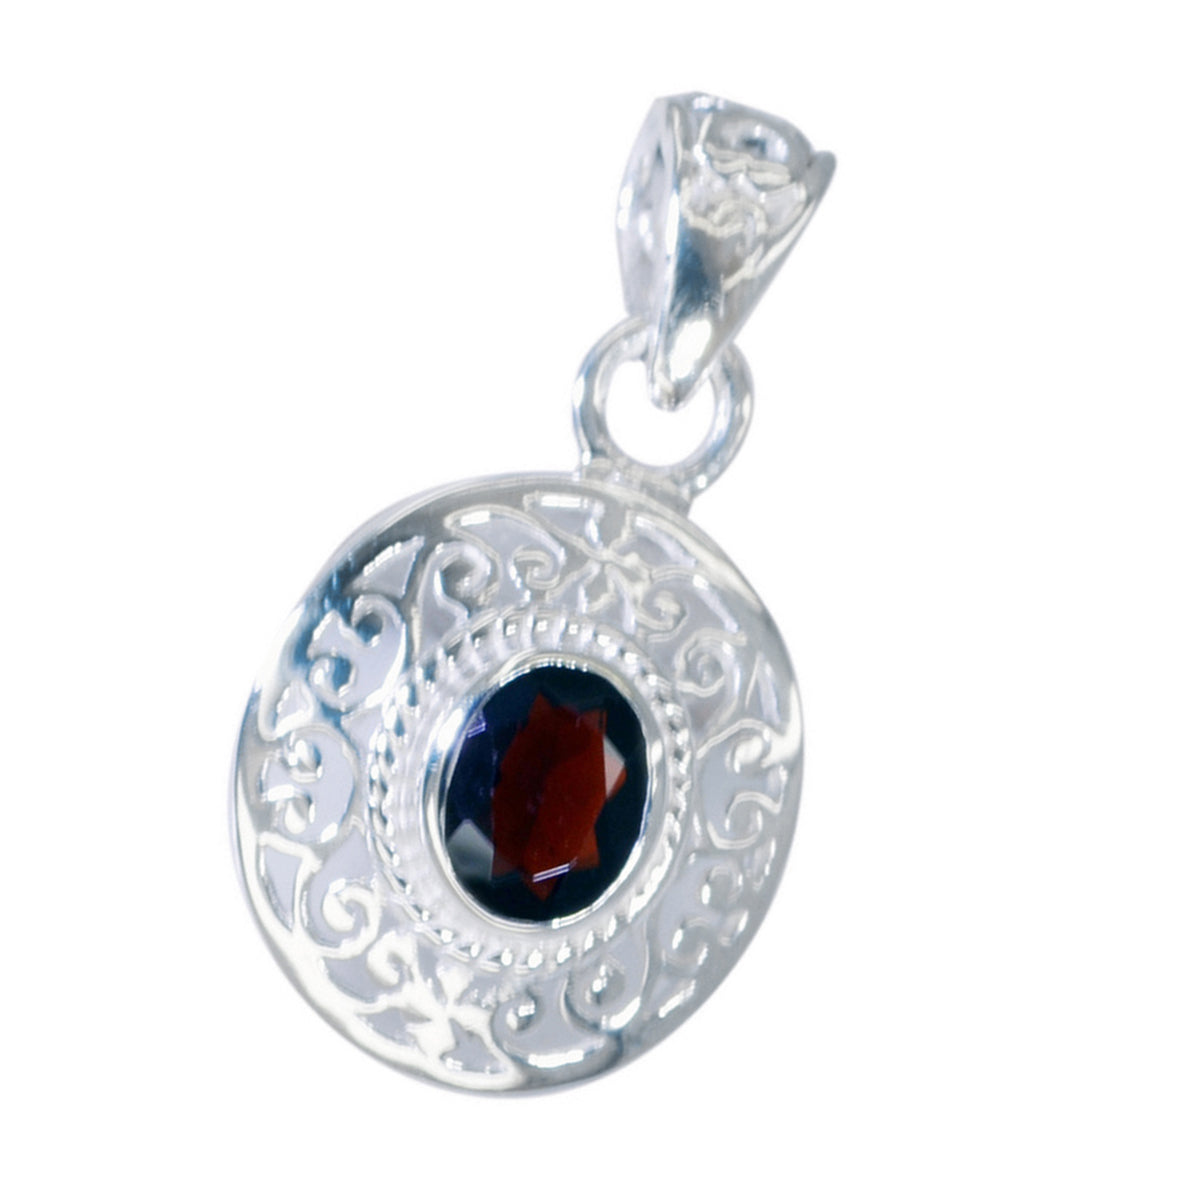 Riyo Genuine Gems Oval Faceted Red Garnet Silver Pendant Gift For Sister